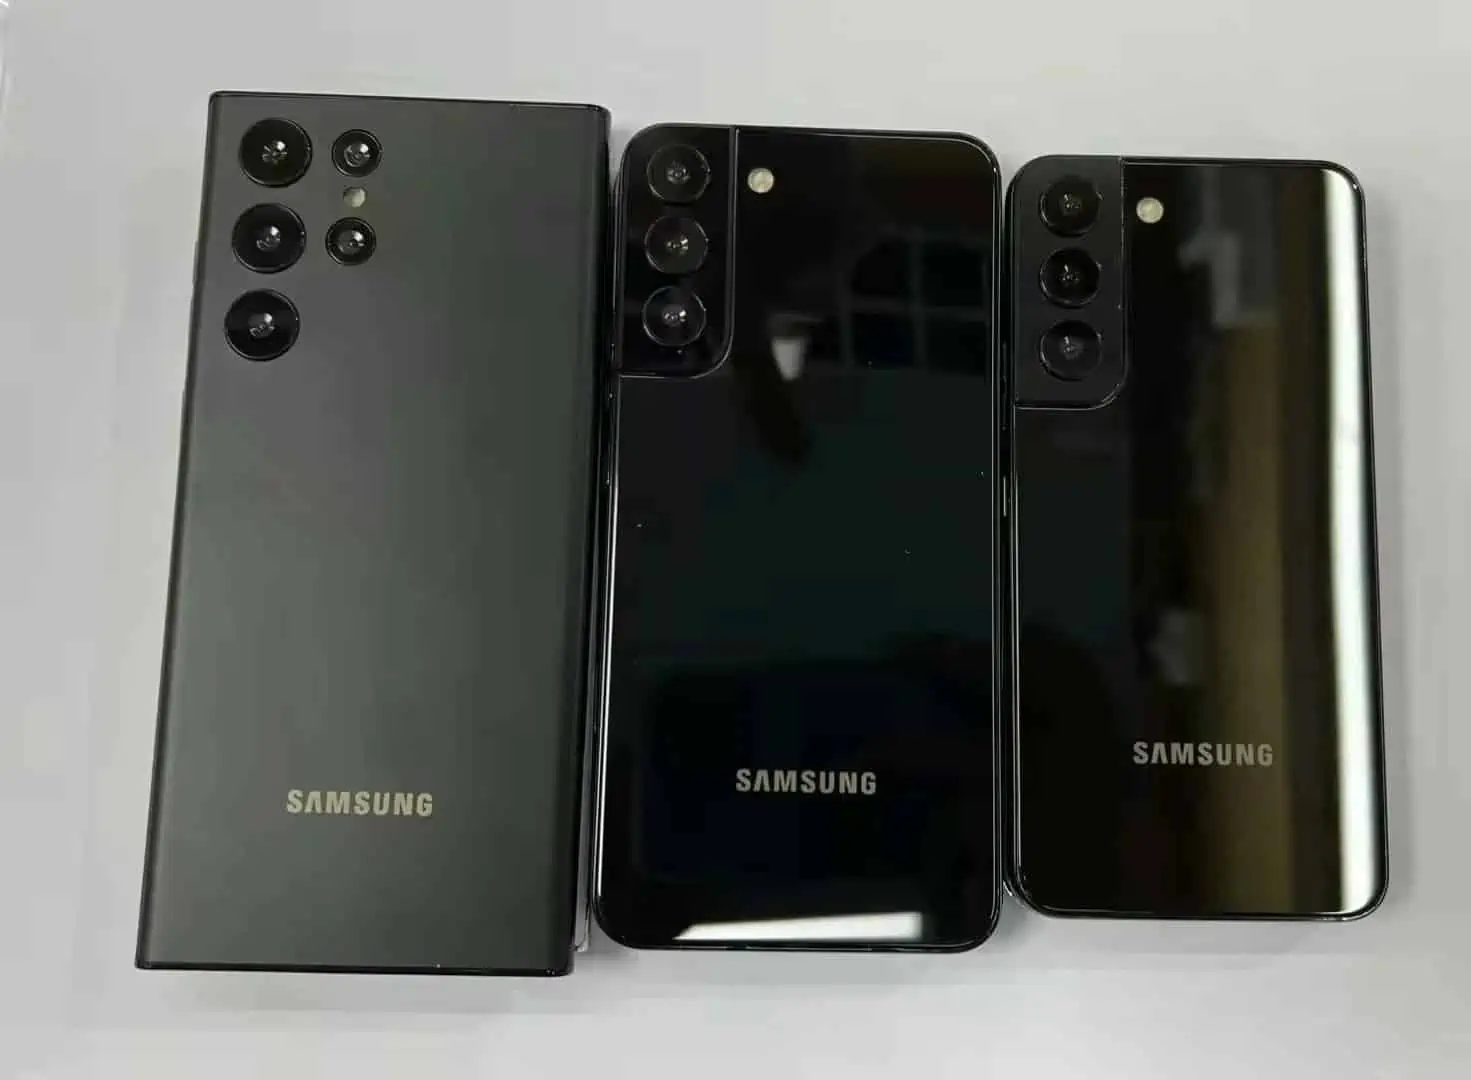 Jon Prosser: Samsung Galaxy S22 general availability slightly delayed